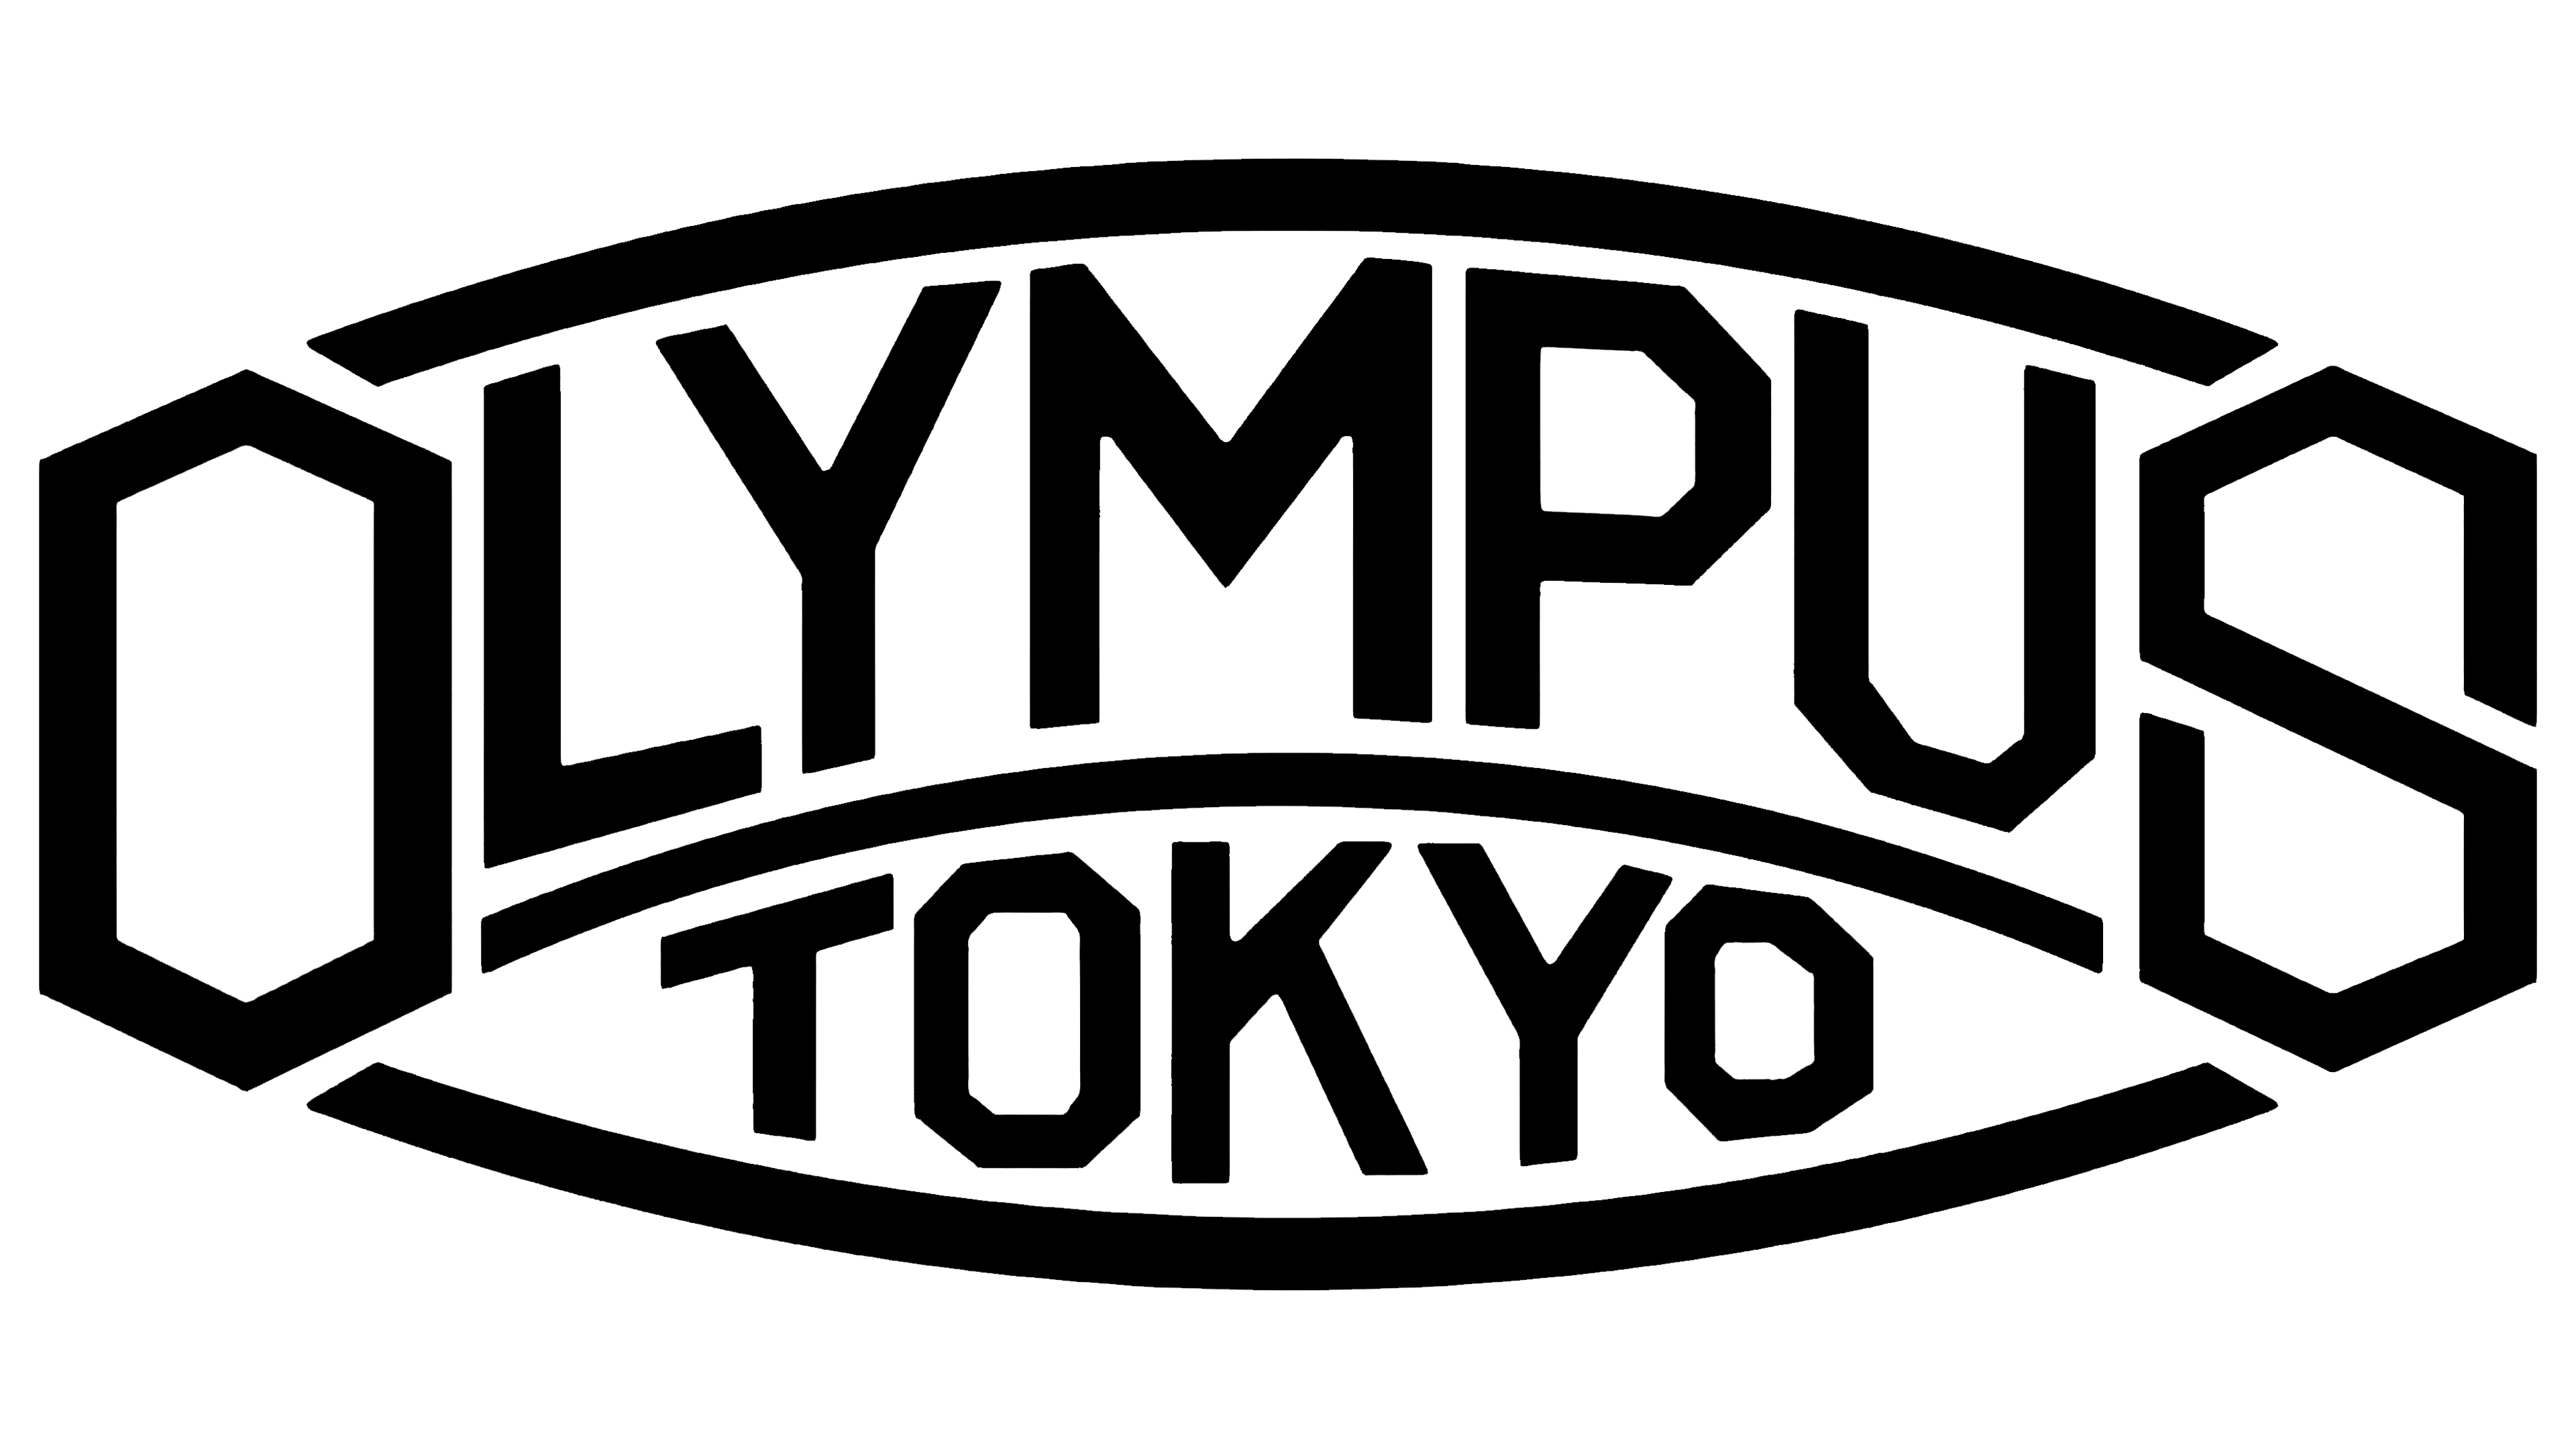 Olympus Logo PNG Transparent & SVG Vector - Freebie Supply